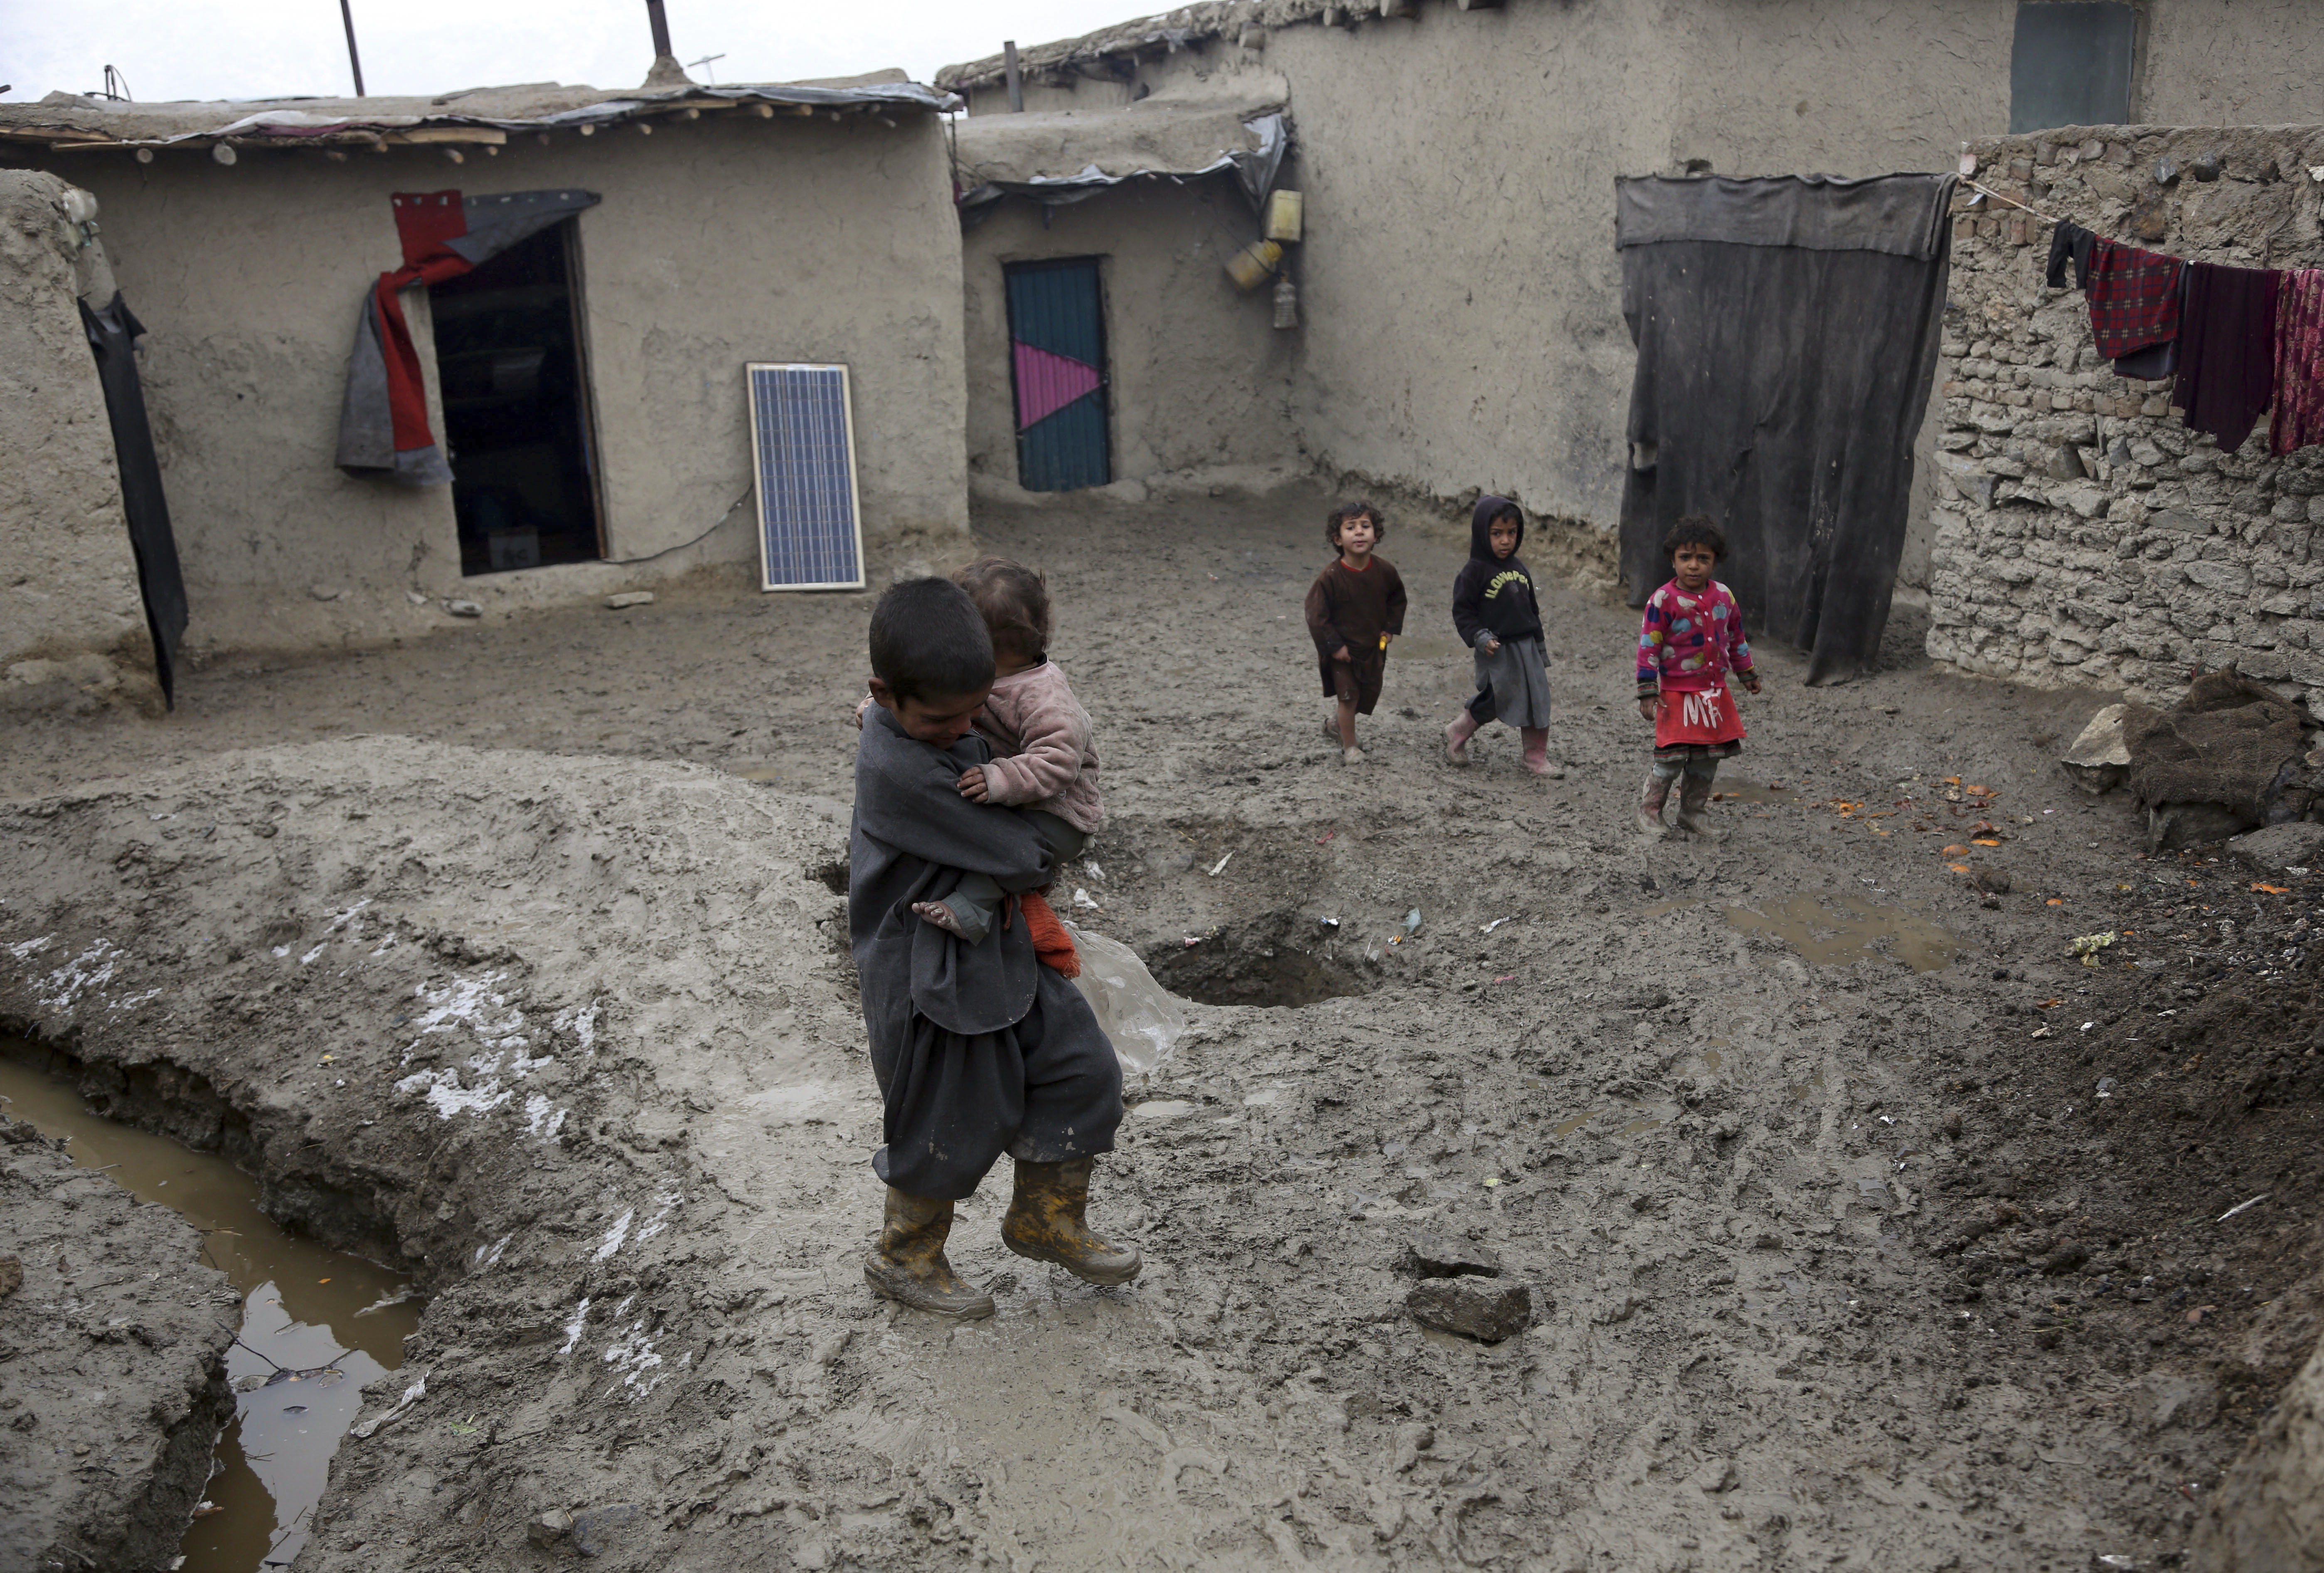 Afghan children walk on a muddy street in Kabul, Monday, Feb. 12, 2018. (AP Photo/Rahmat Gul)